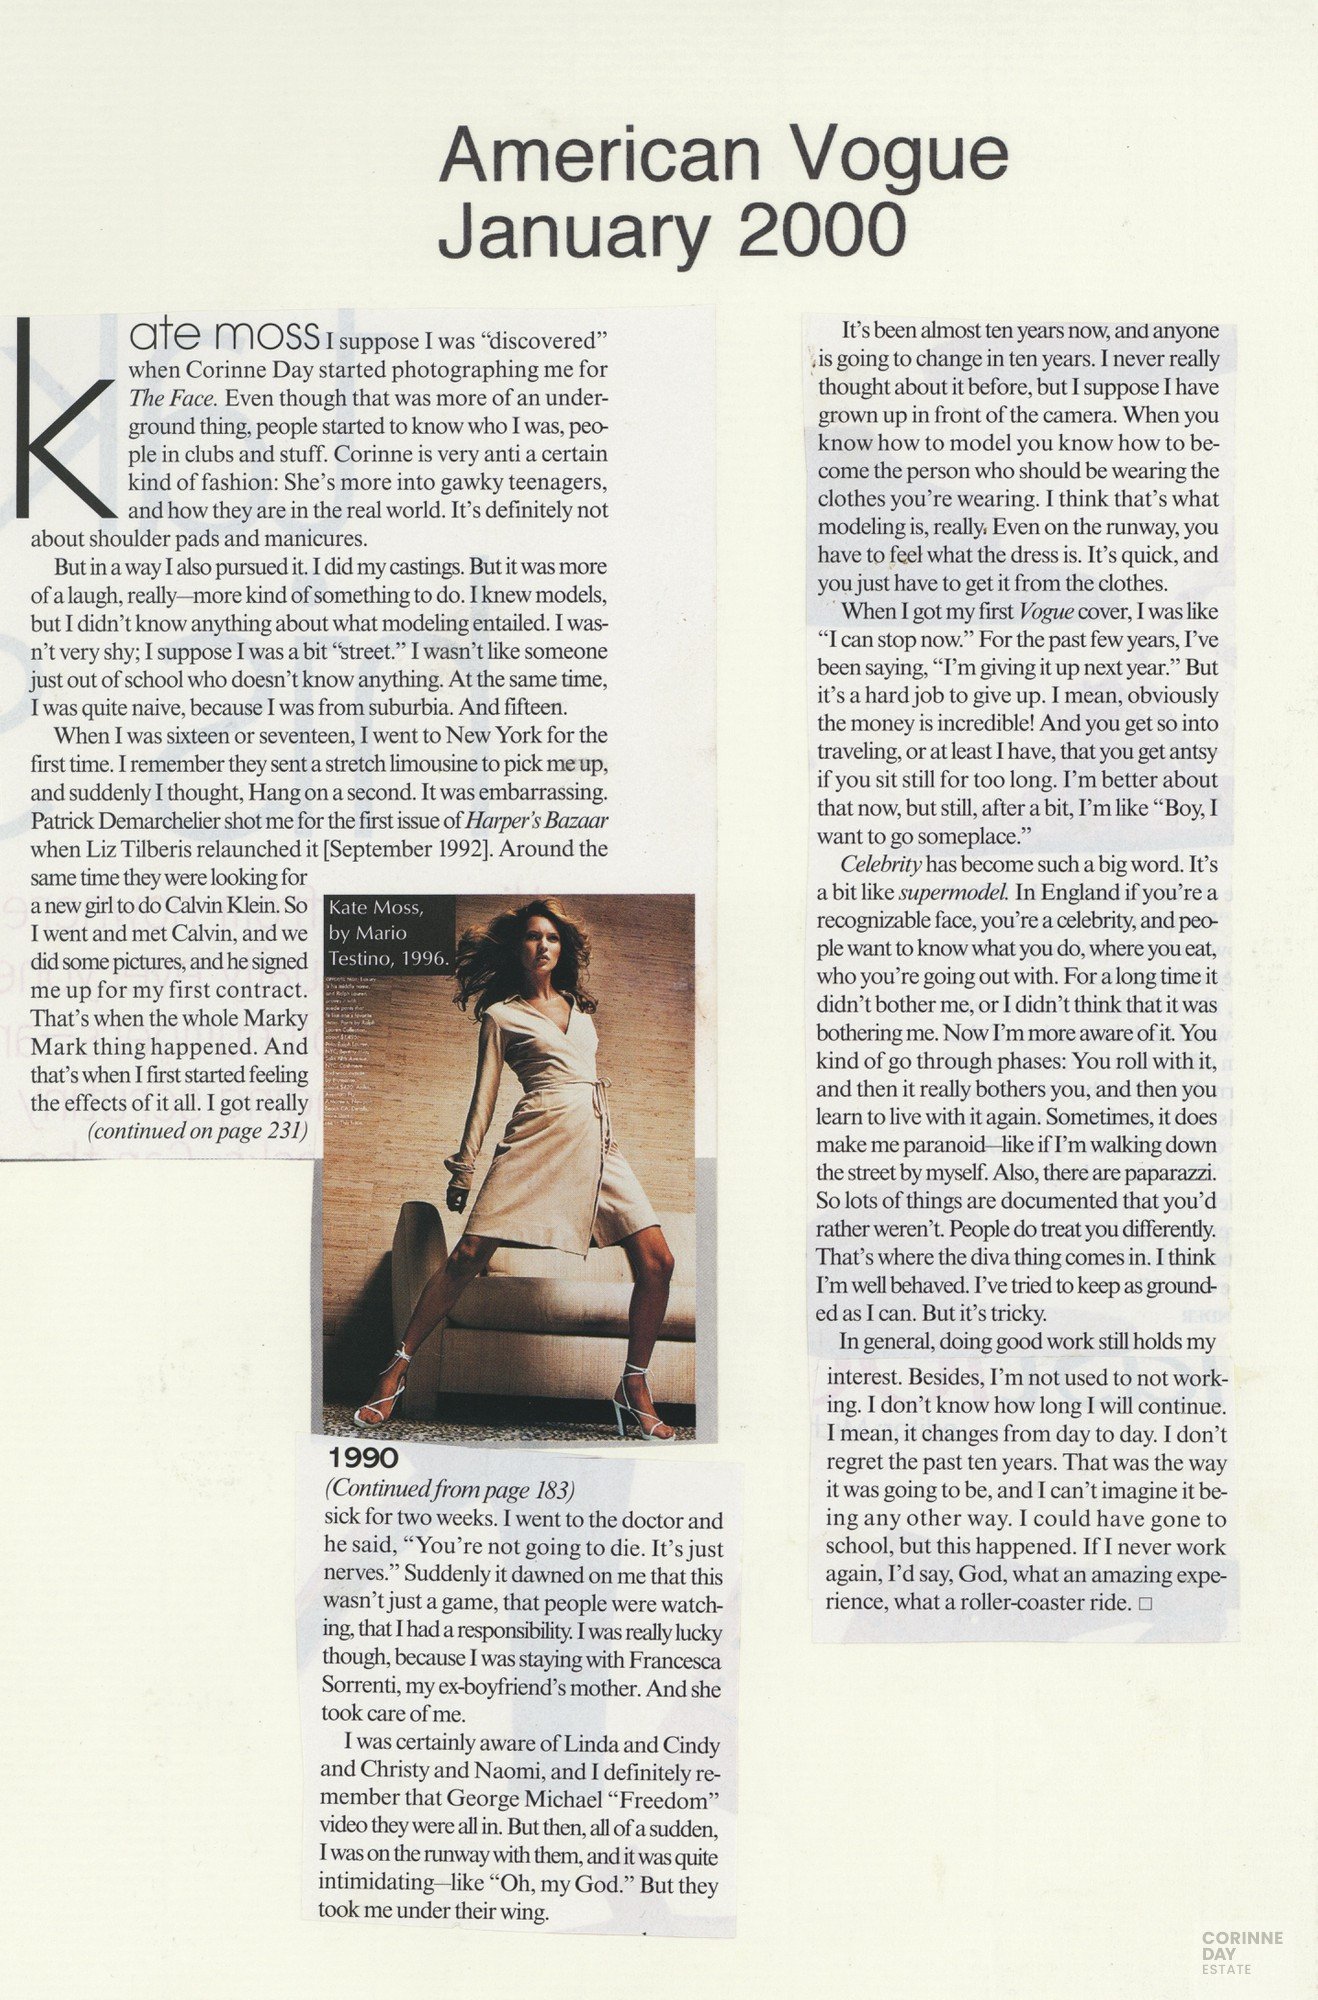 American Vogue, Jan 2000 — Image 1 of 1